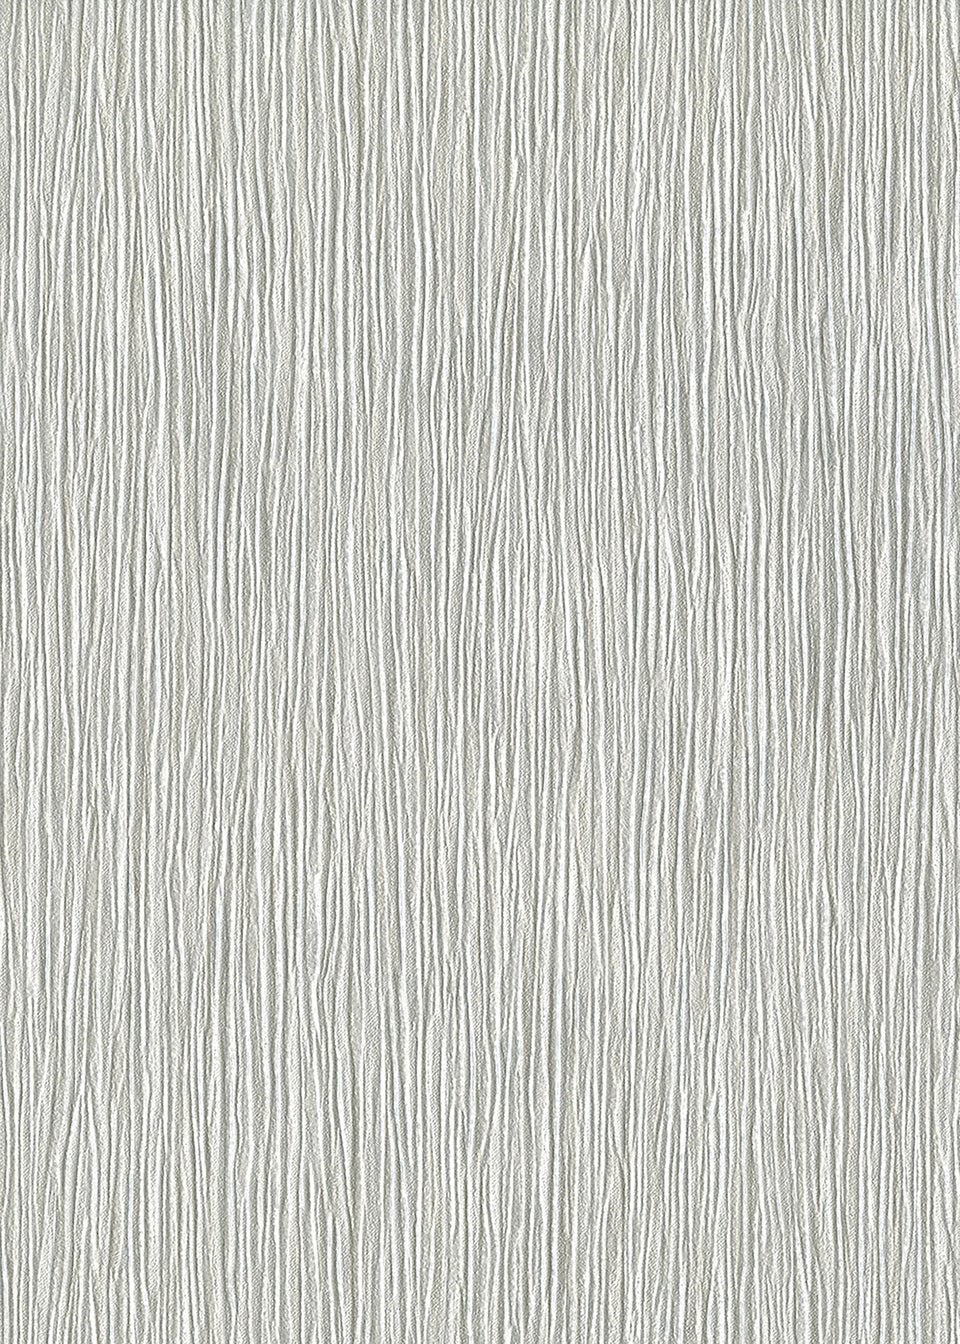 Muriva Texture Wallpaper